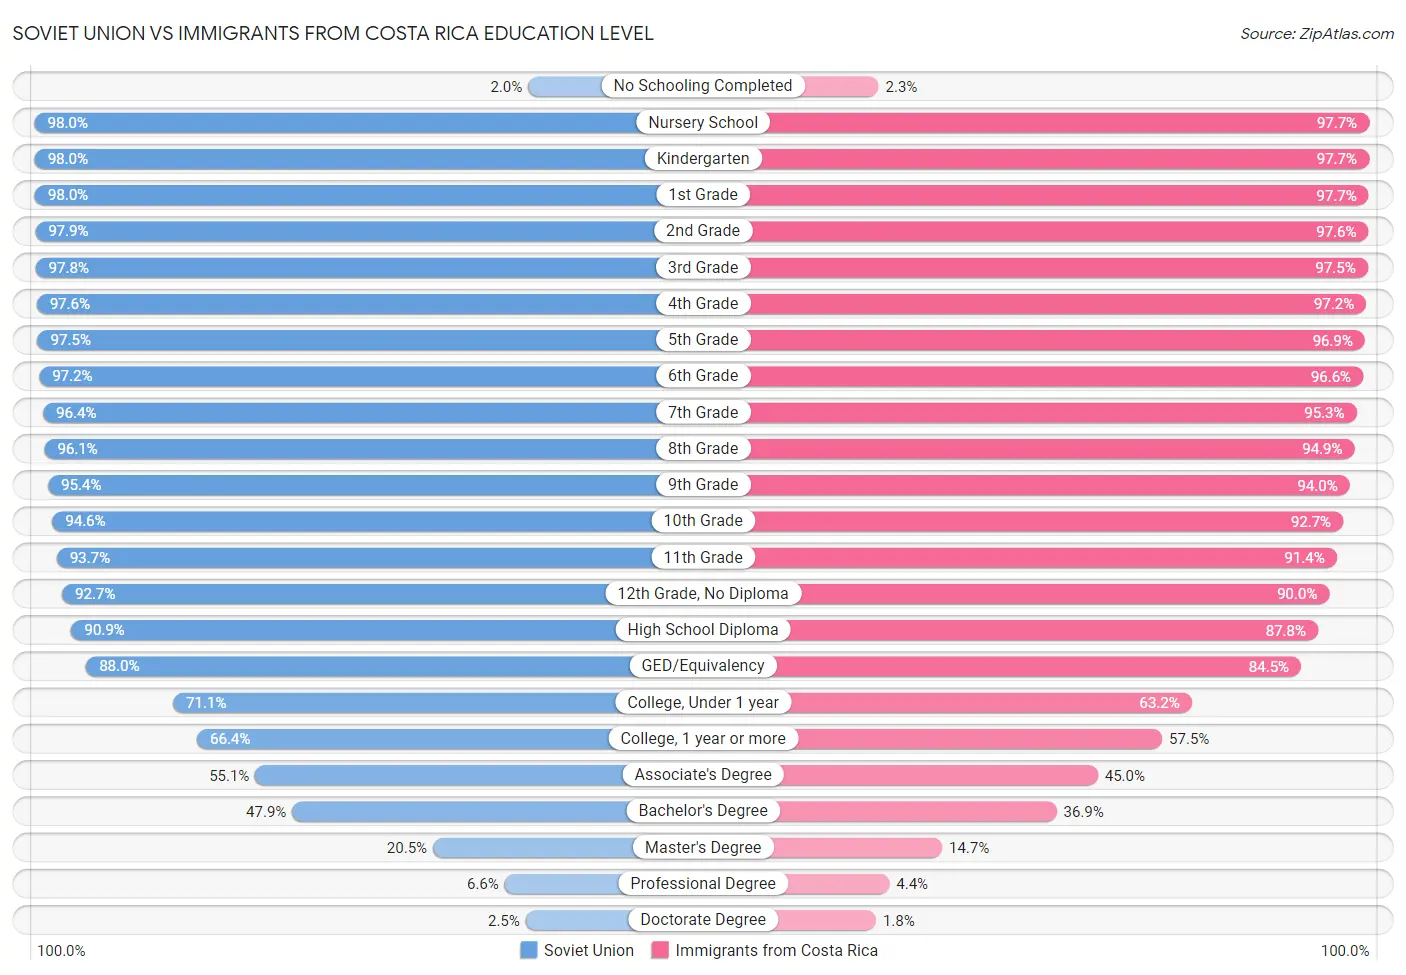 Soviet Union vs Immigrants from Costa Rica Education Level